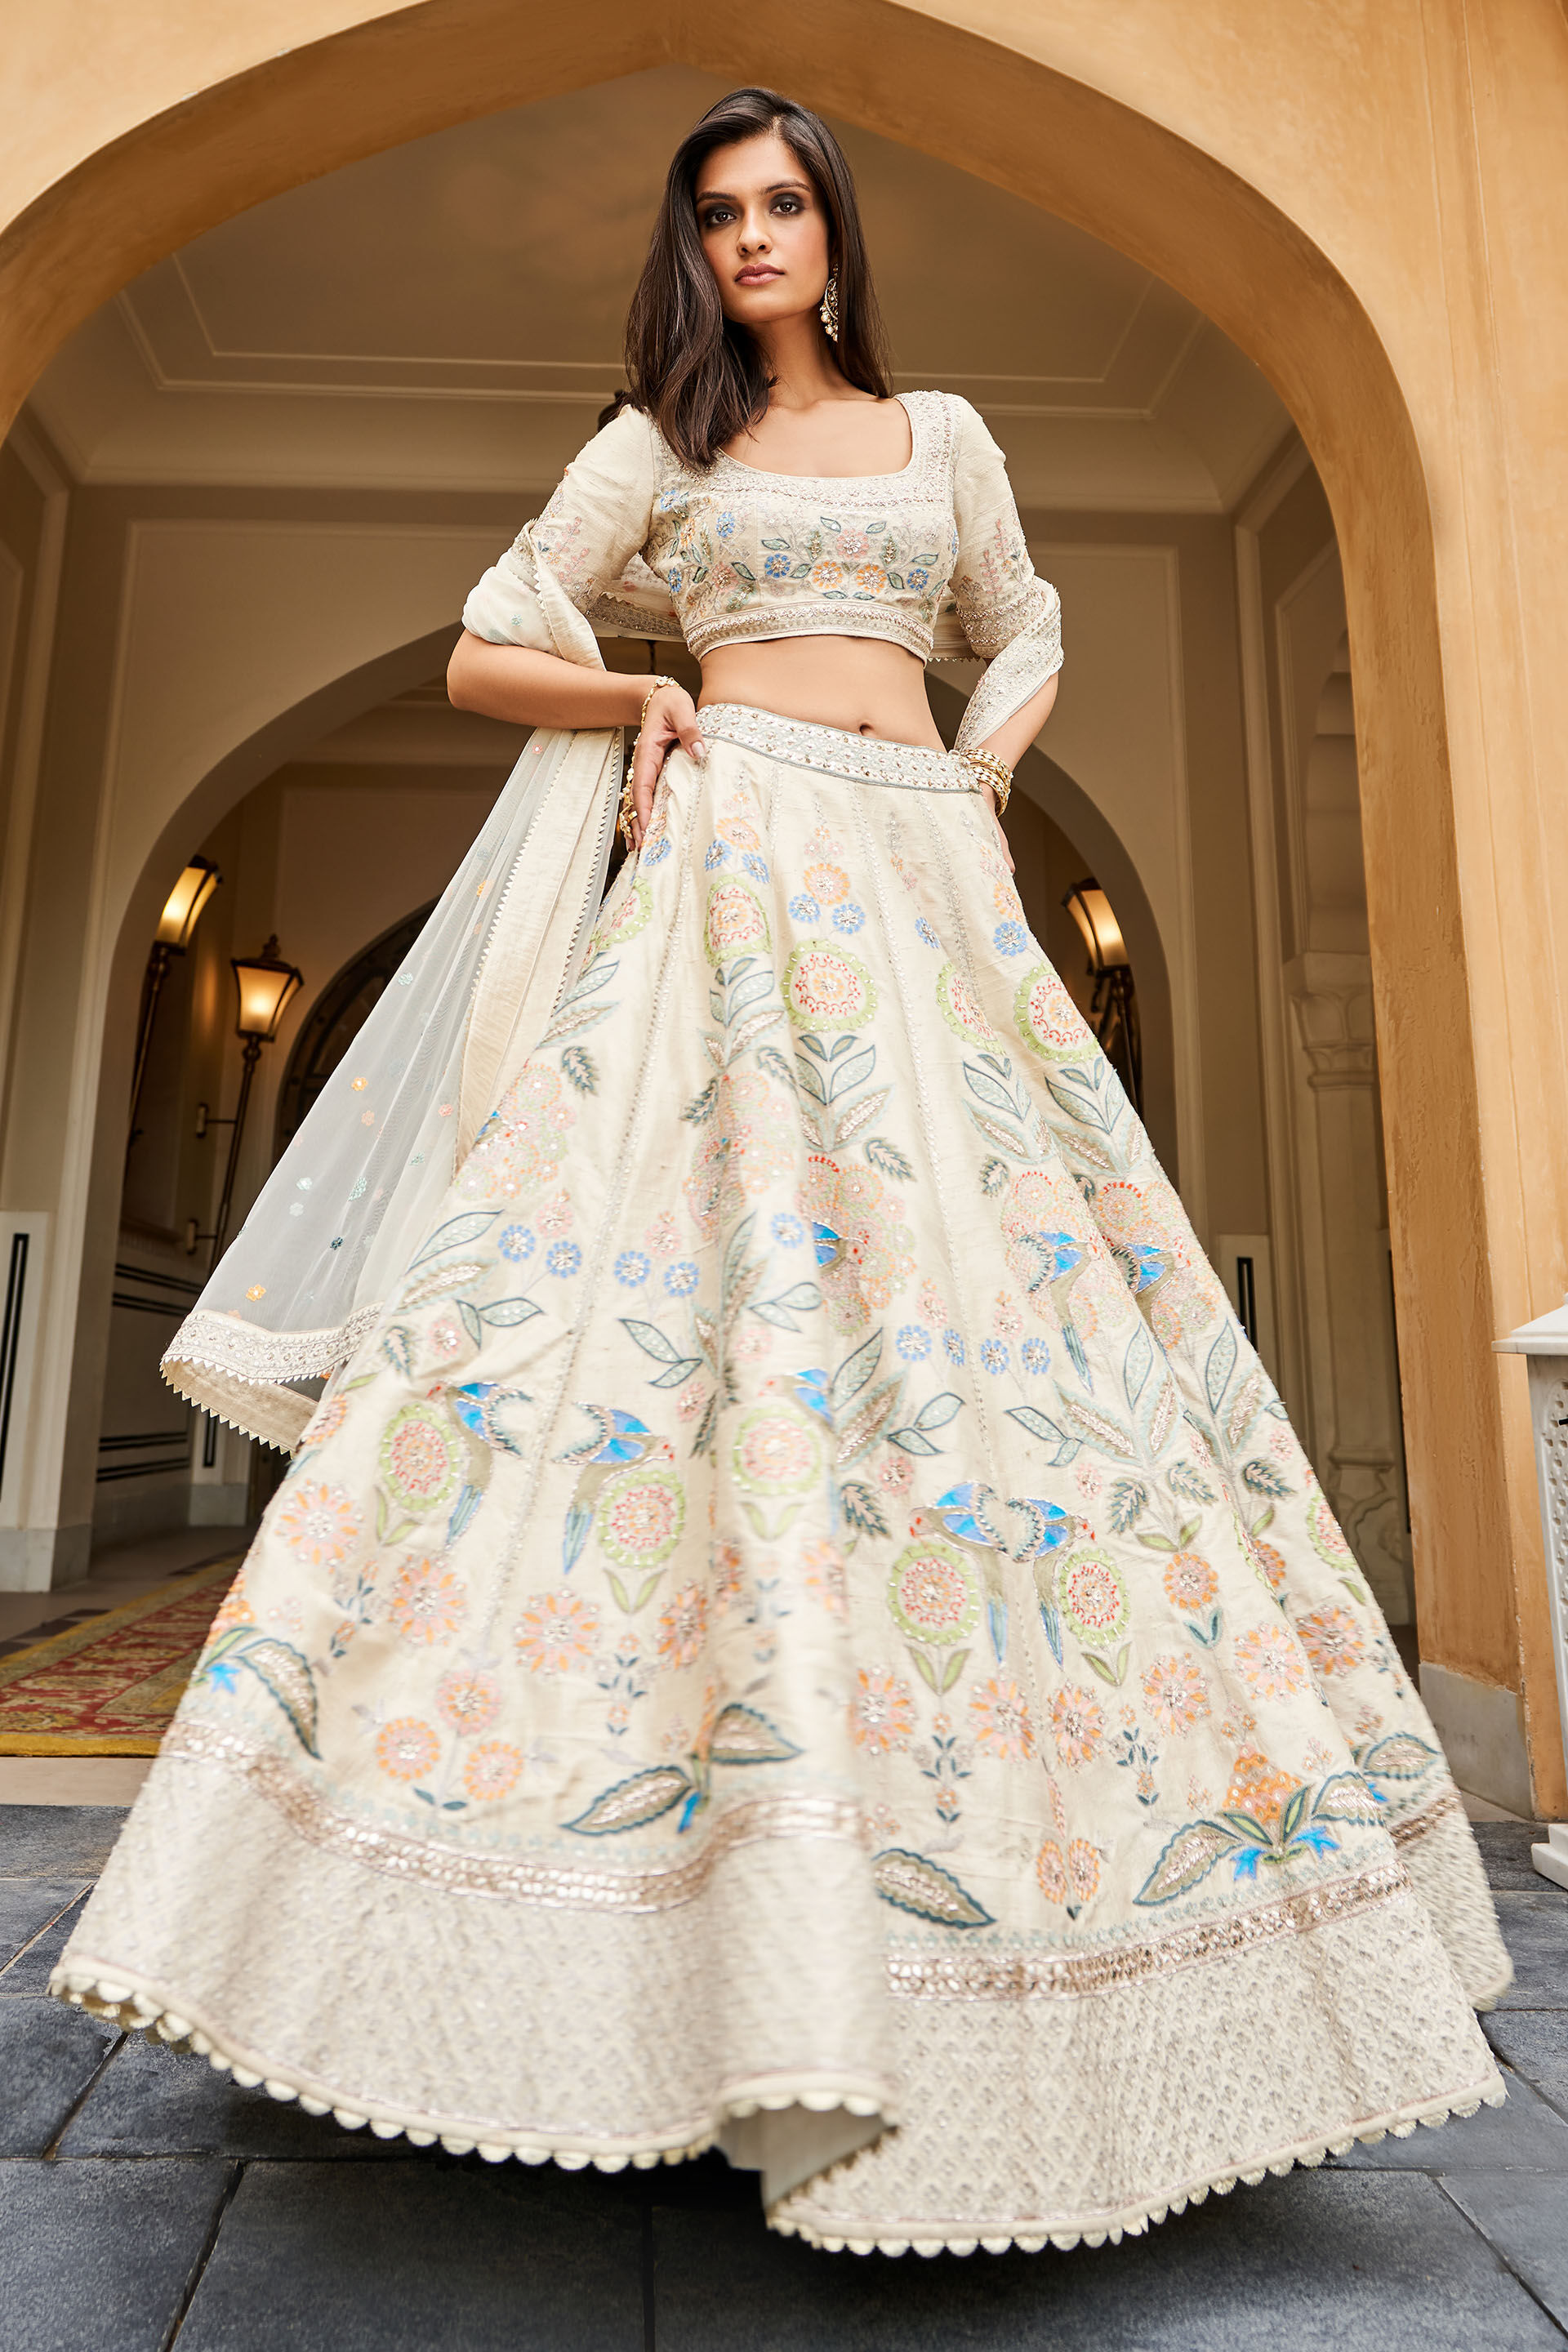 Best Onscreen Bridal Lehenga Looks From Bollywood Movies